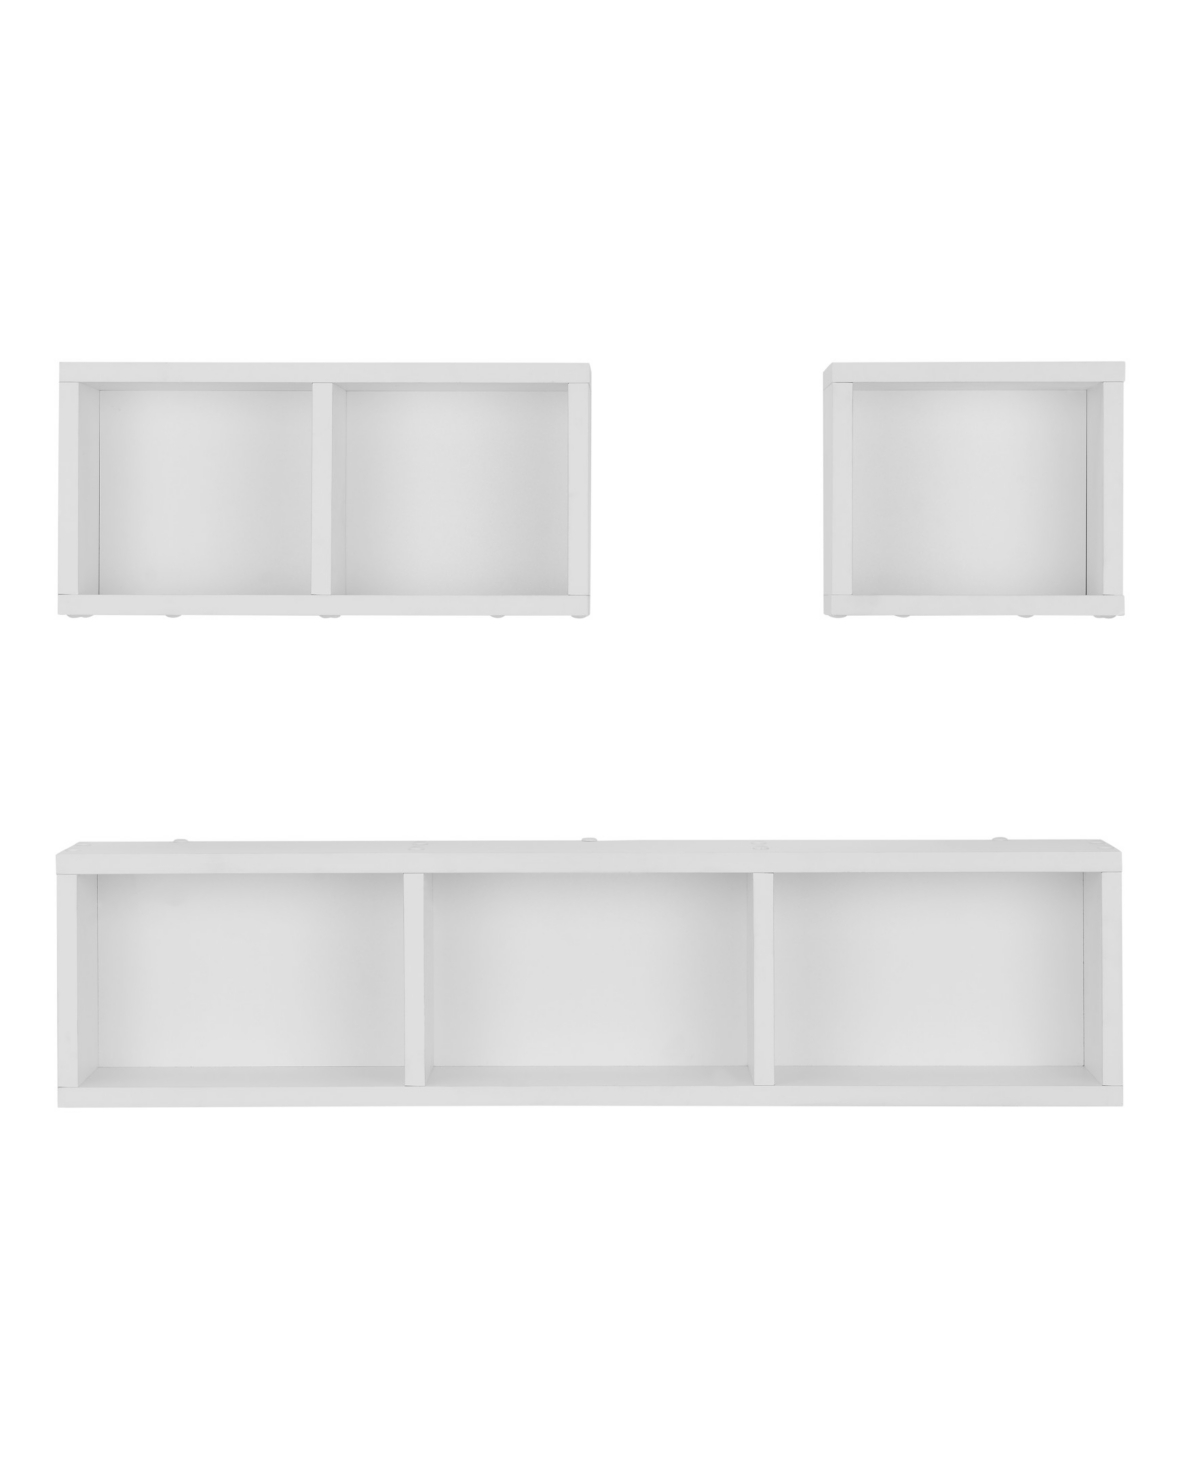 Bauhaus Floating Geometric Cubby Wall Shelves, Set of 3 Sizes - White